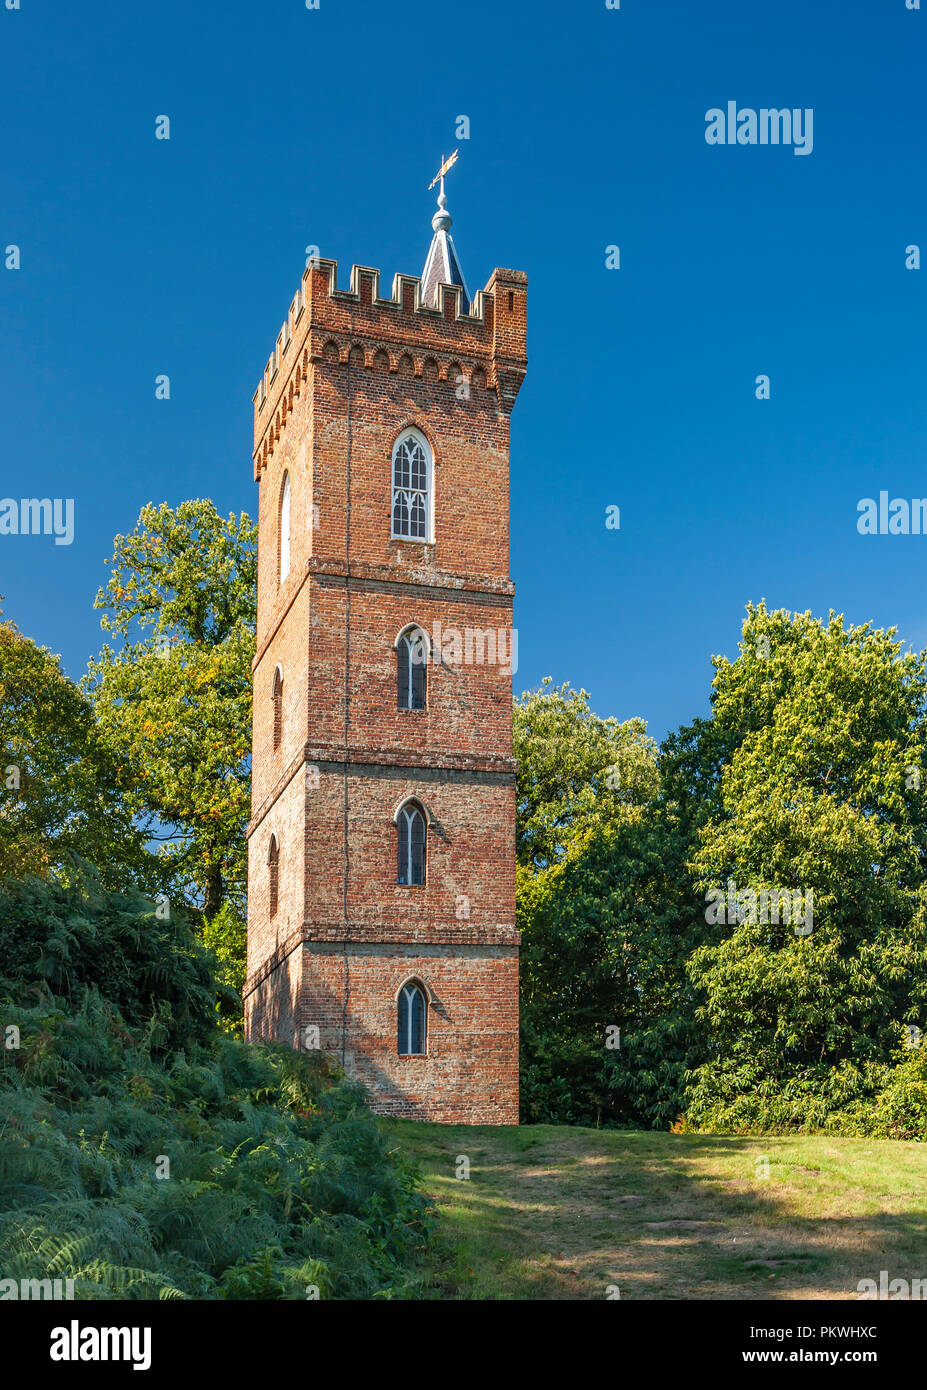 Painshill gotischen Turm. Stockfoto